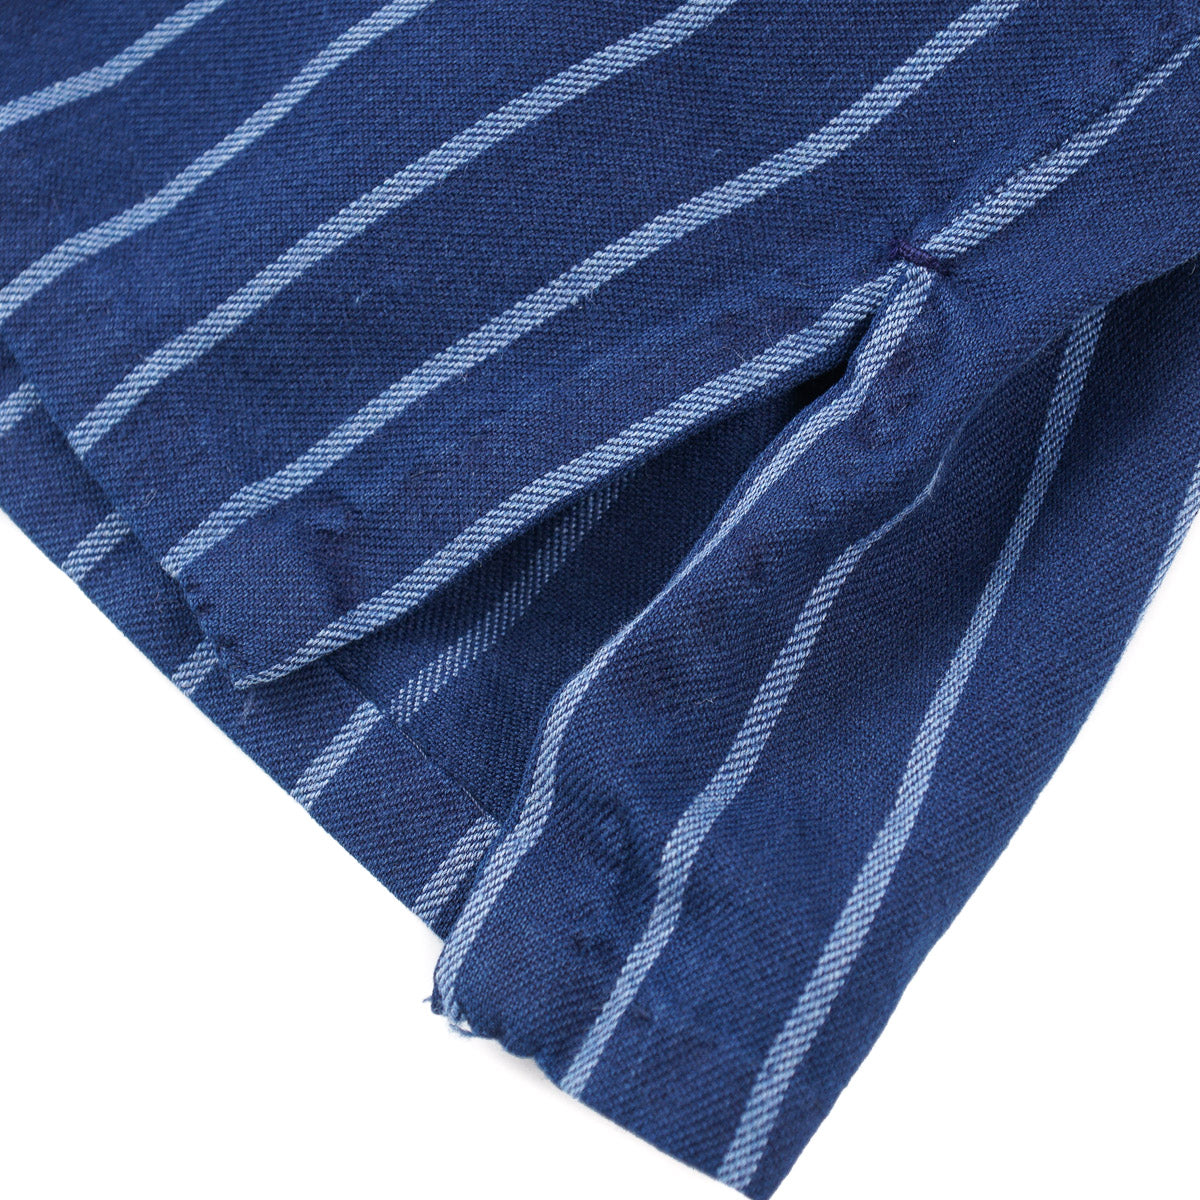 Kiton Slim-Fit Soft Jersey Cotton Shirt - Top Shelf Apparel